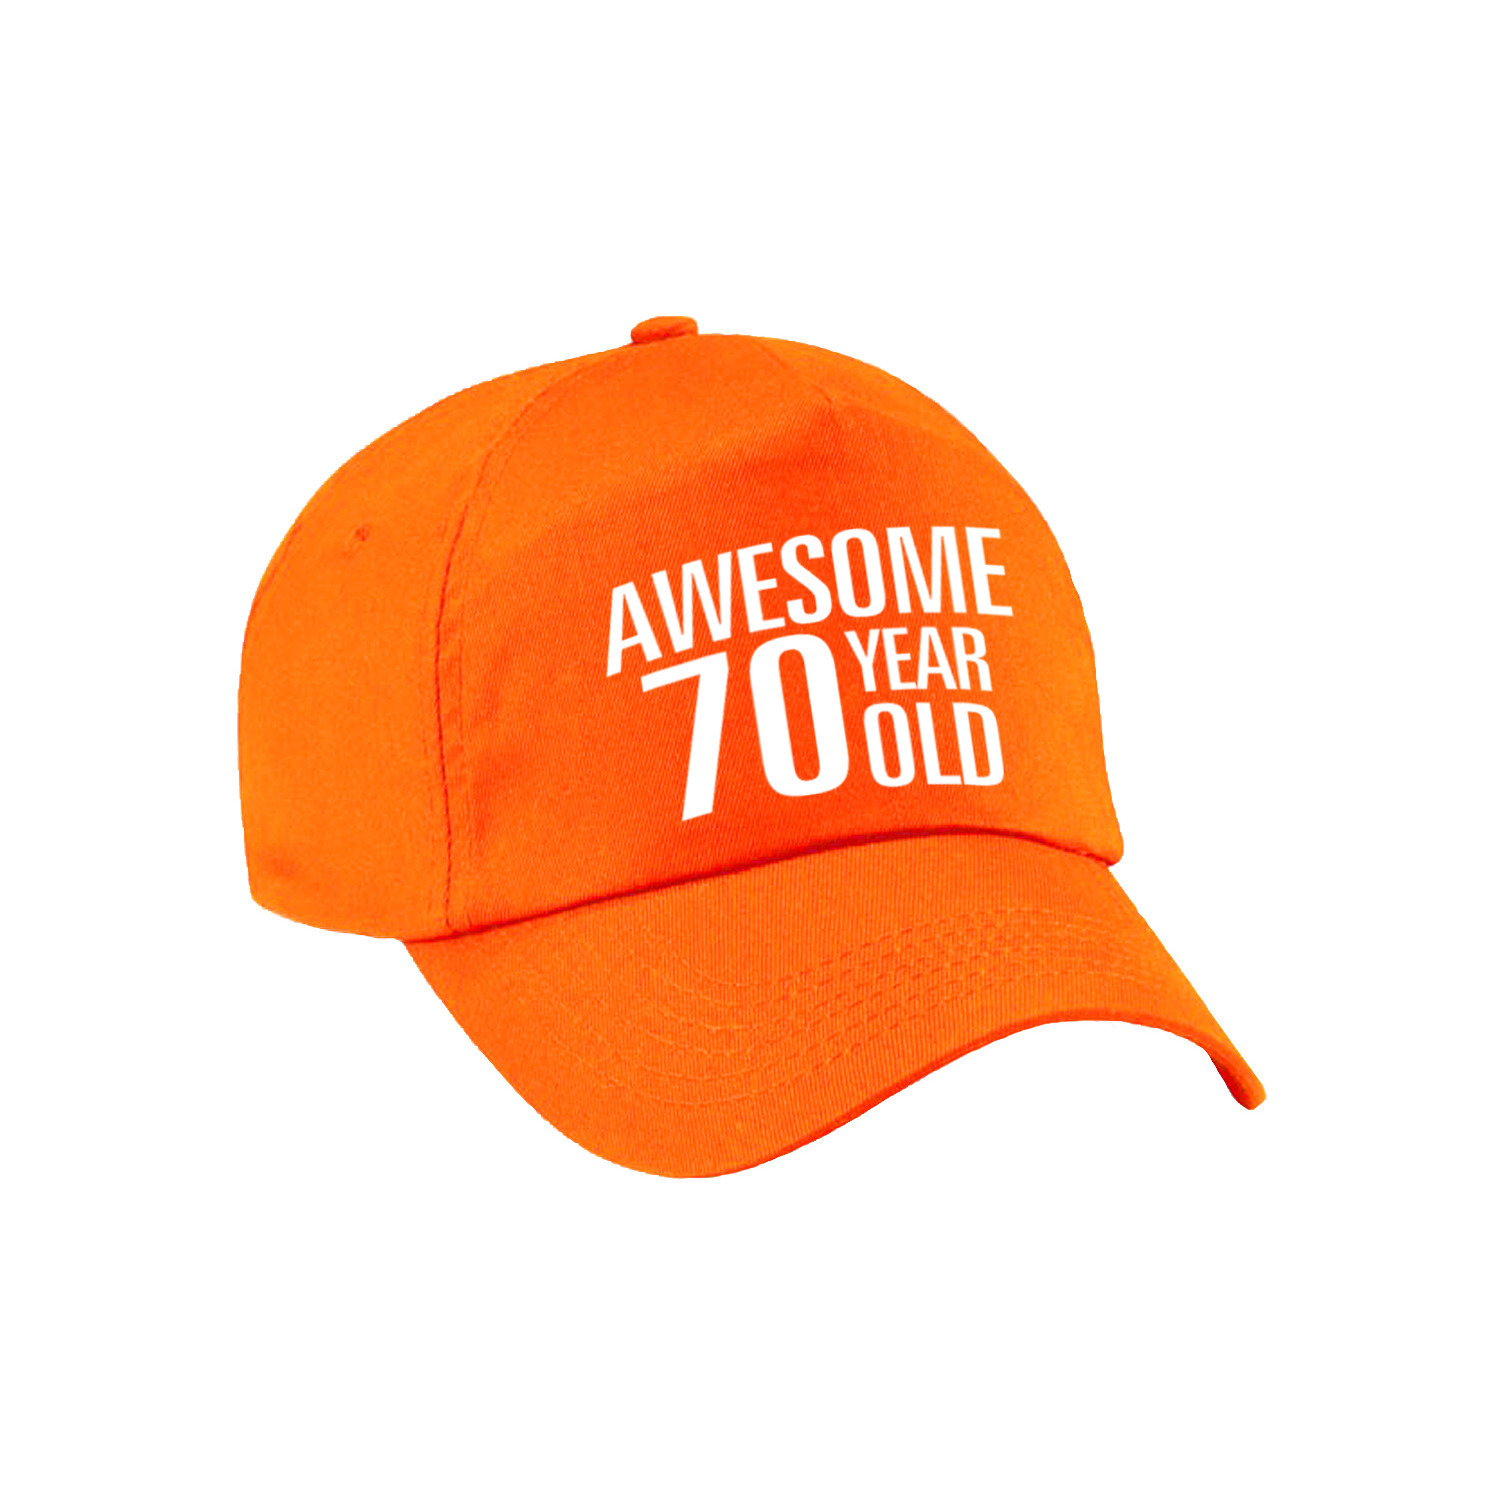 Awesome 70 year old verjaardag pet-cap oranje voor dames en heren